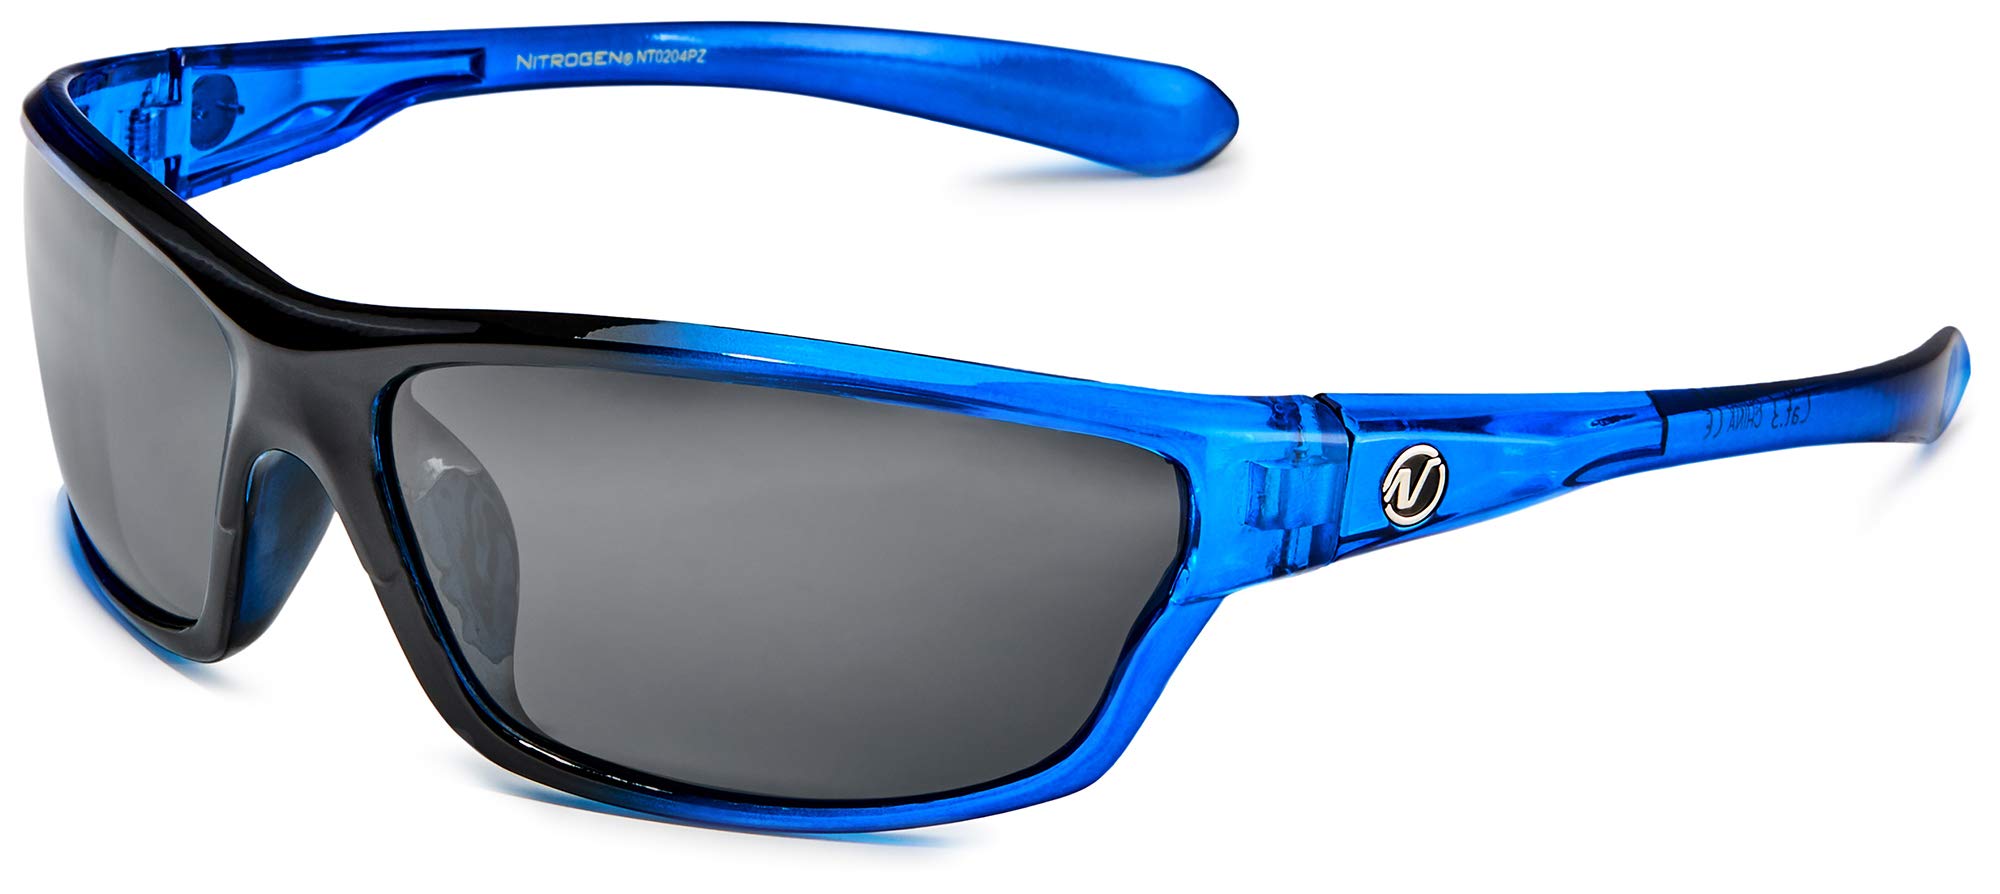 Nitrogen Polarized Wrap Around Sport Sunglasses For Men Women Uv400 Driving Fishing Running Cycling Baseball Softball Golf Wrapa